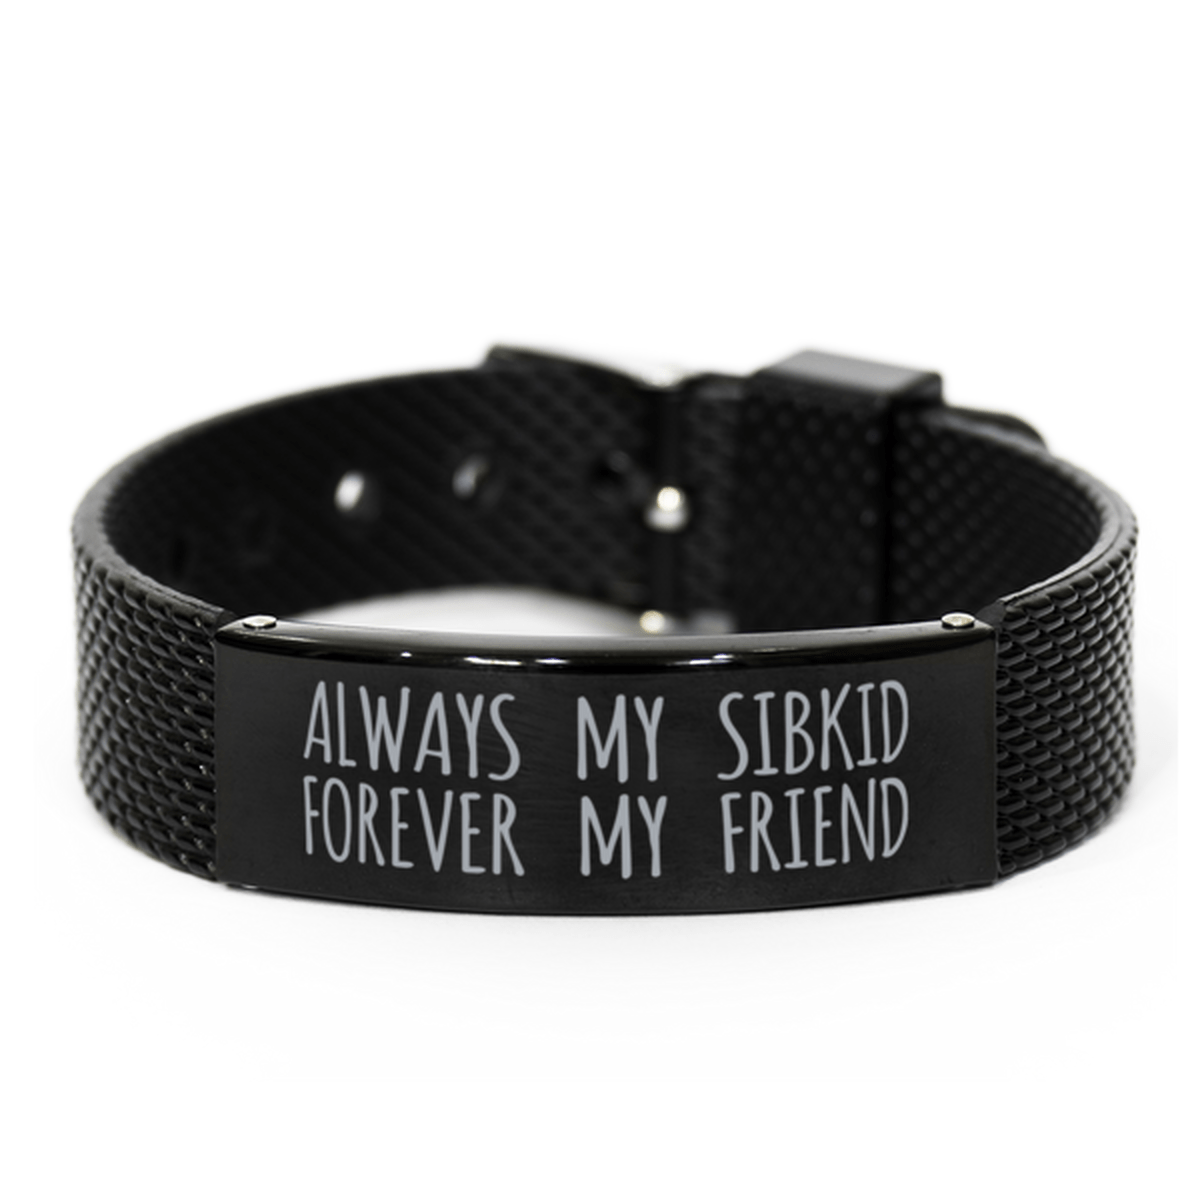 Inspirational Sibkid Black Shark Mesh Bracelet, Always My Sibkid Forever My Friend, Best Birthday Gifts for Family Friends